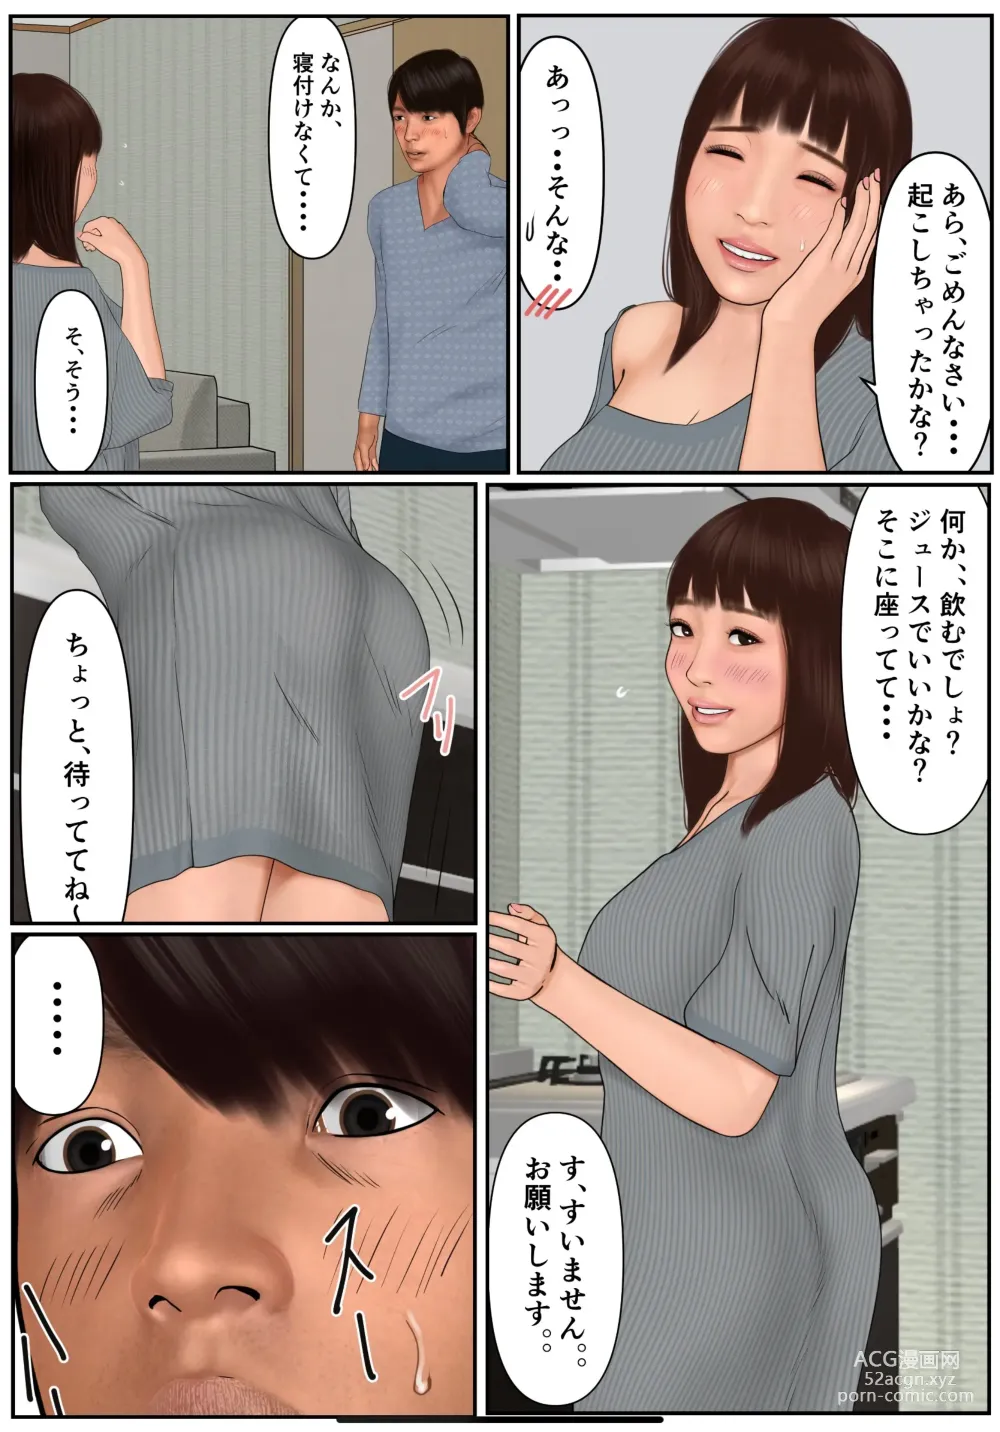 Page 19 of doujinshi Musume no Kareshi ni Oboreta Haha